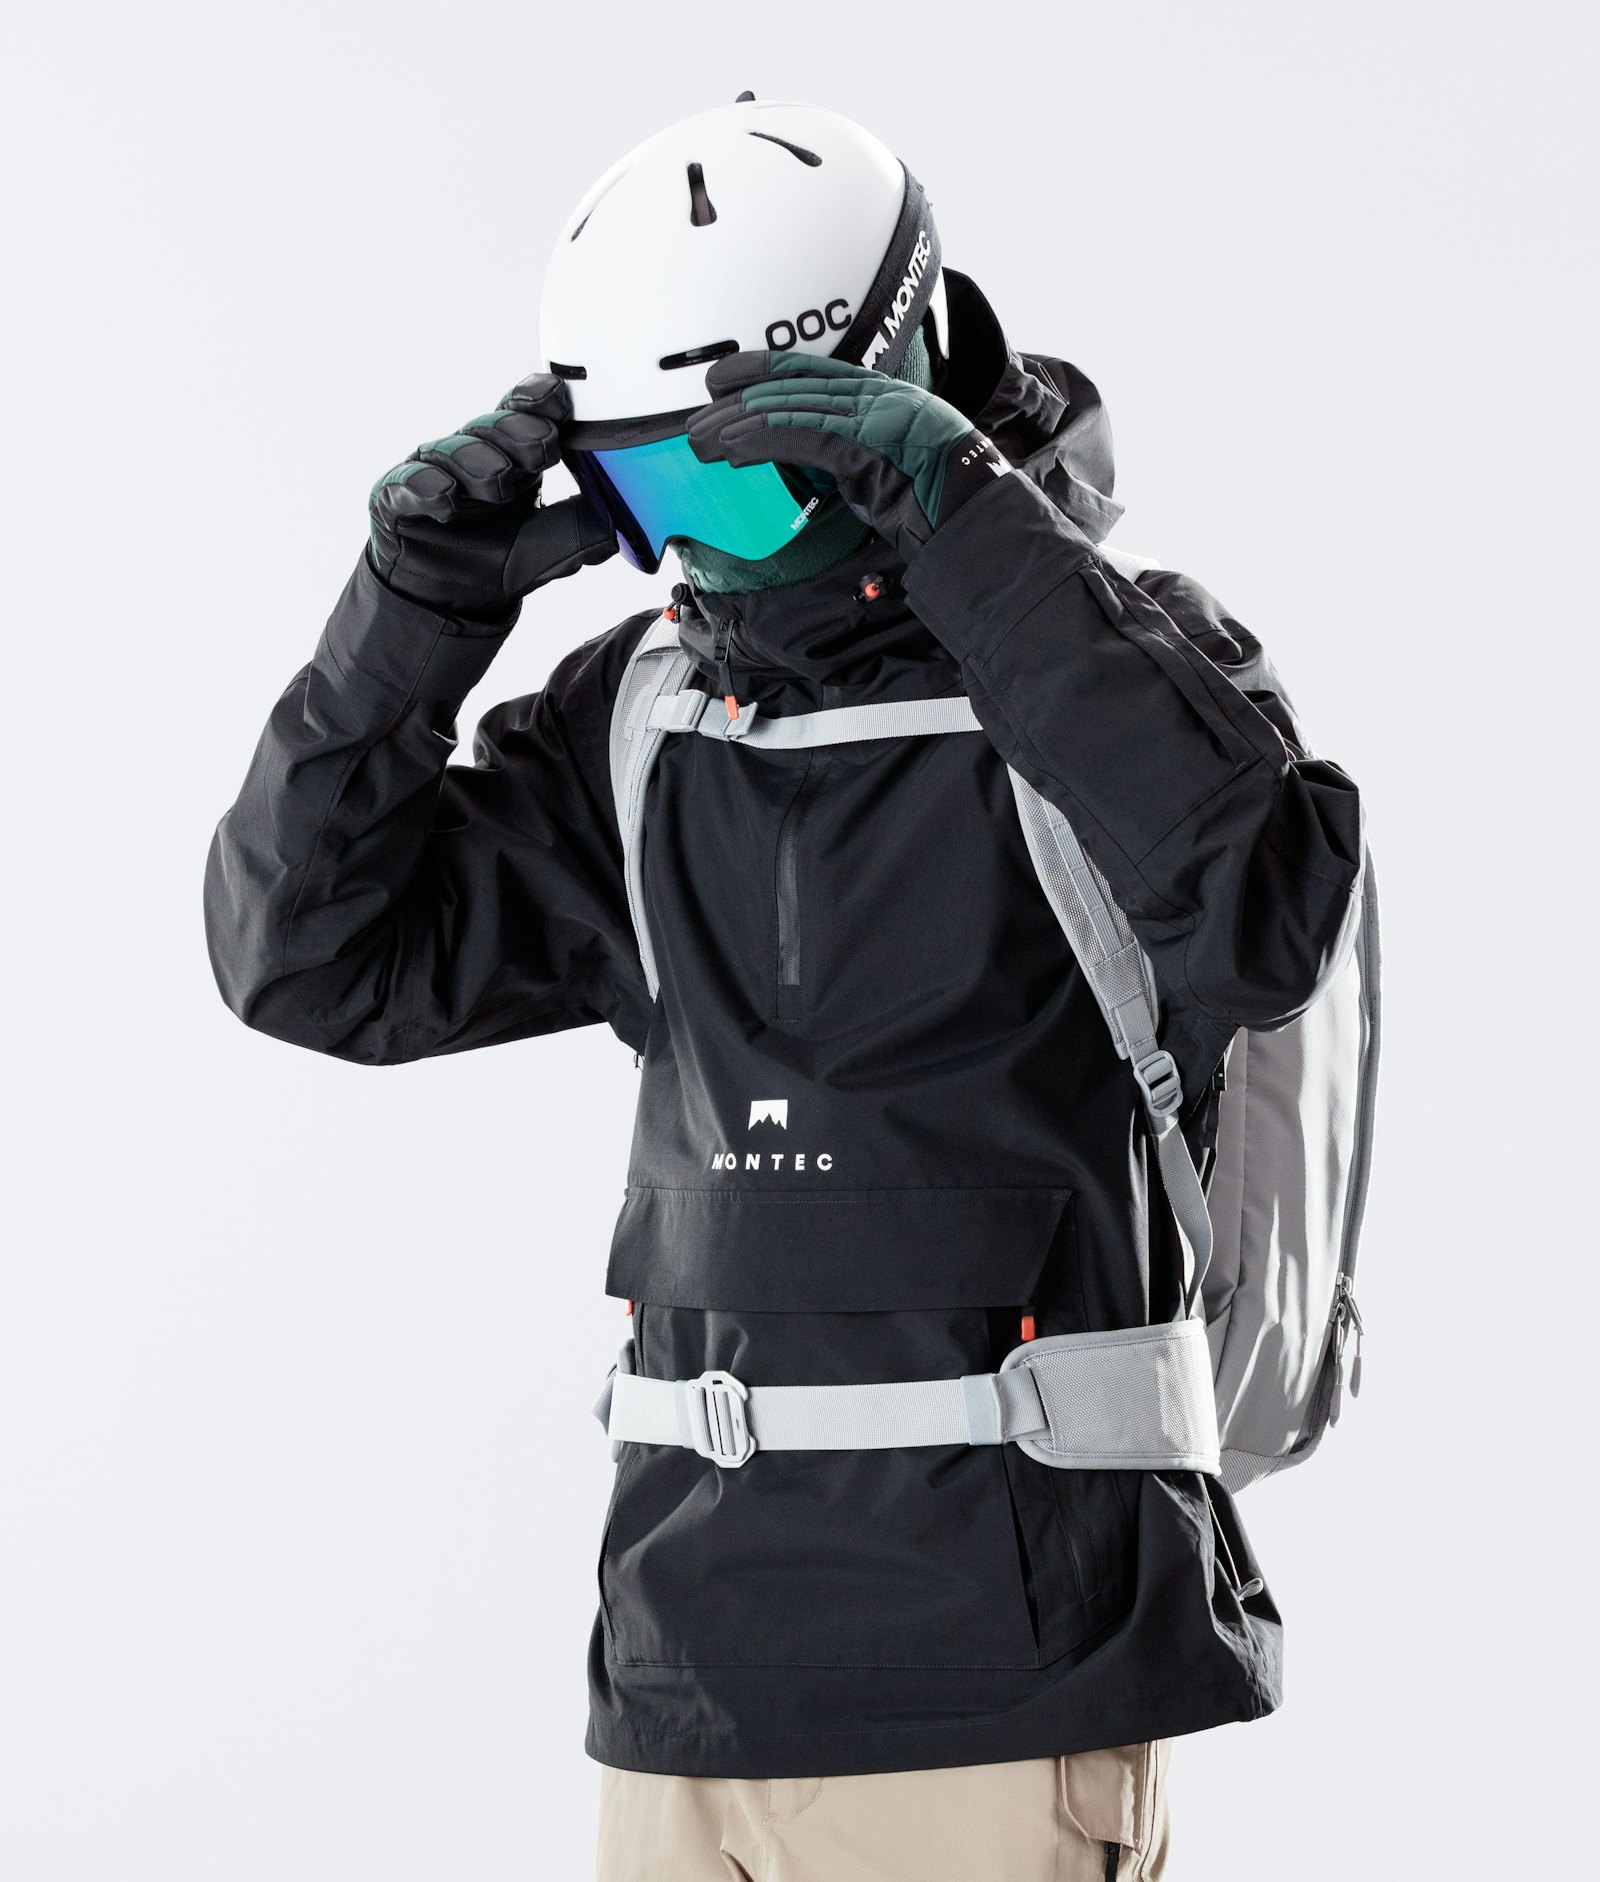 Typhoon 2020 Ski jas Heren Black